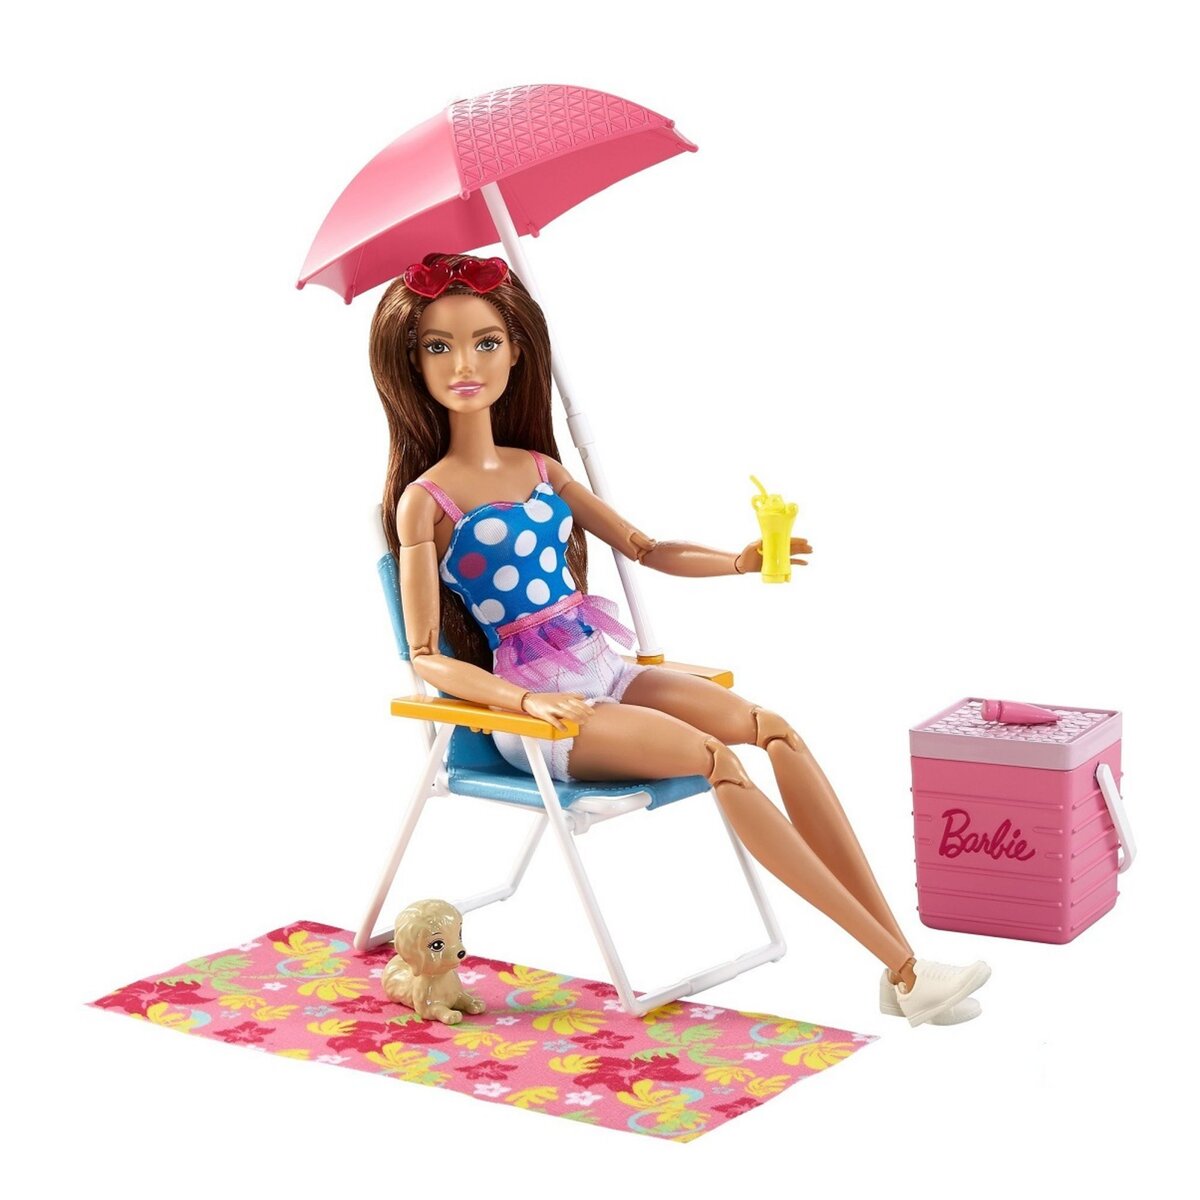 MATTEL Mobilier plein air barbecue Barbie 